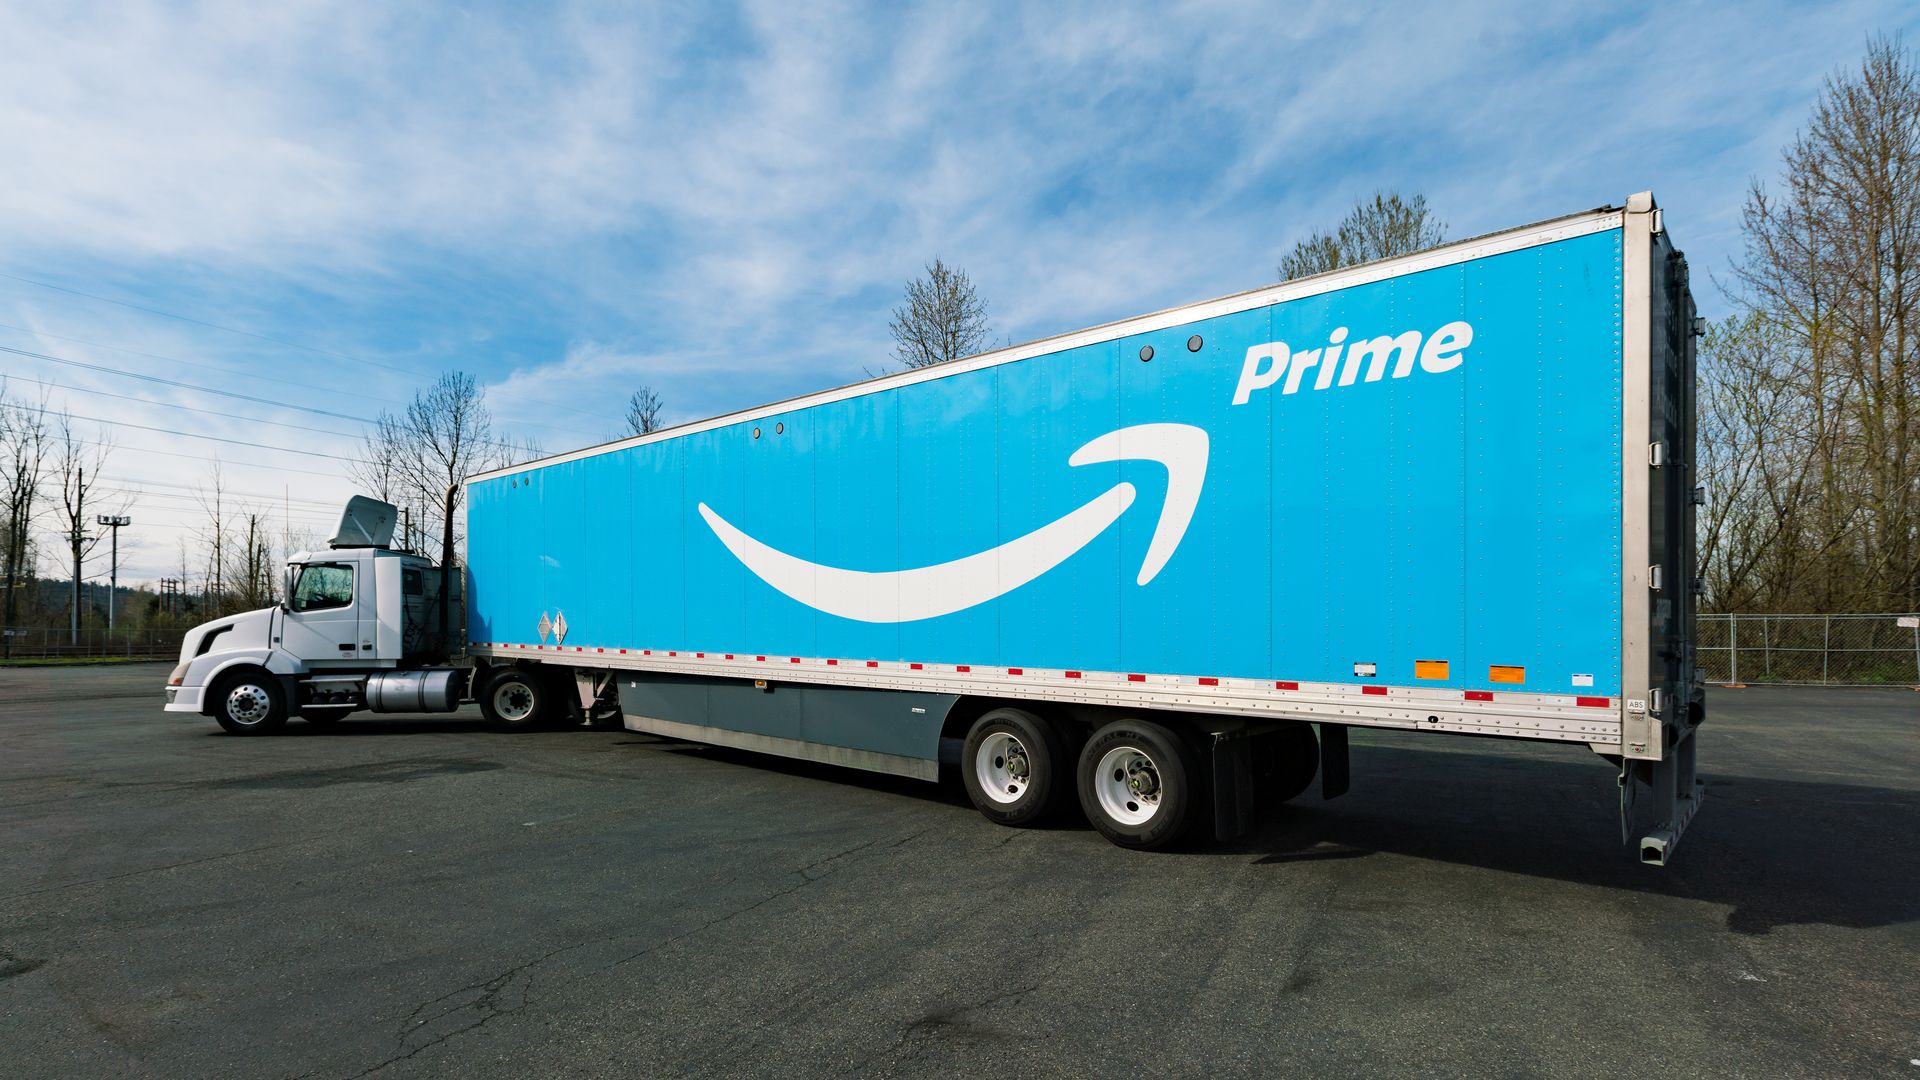 A semi truck with the Amazon Prime logo